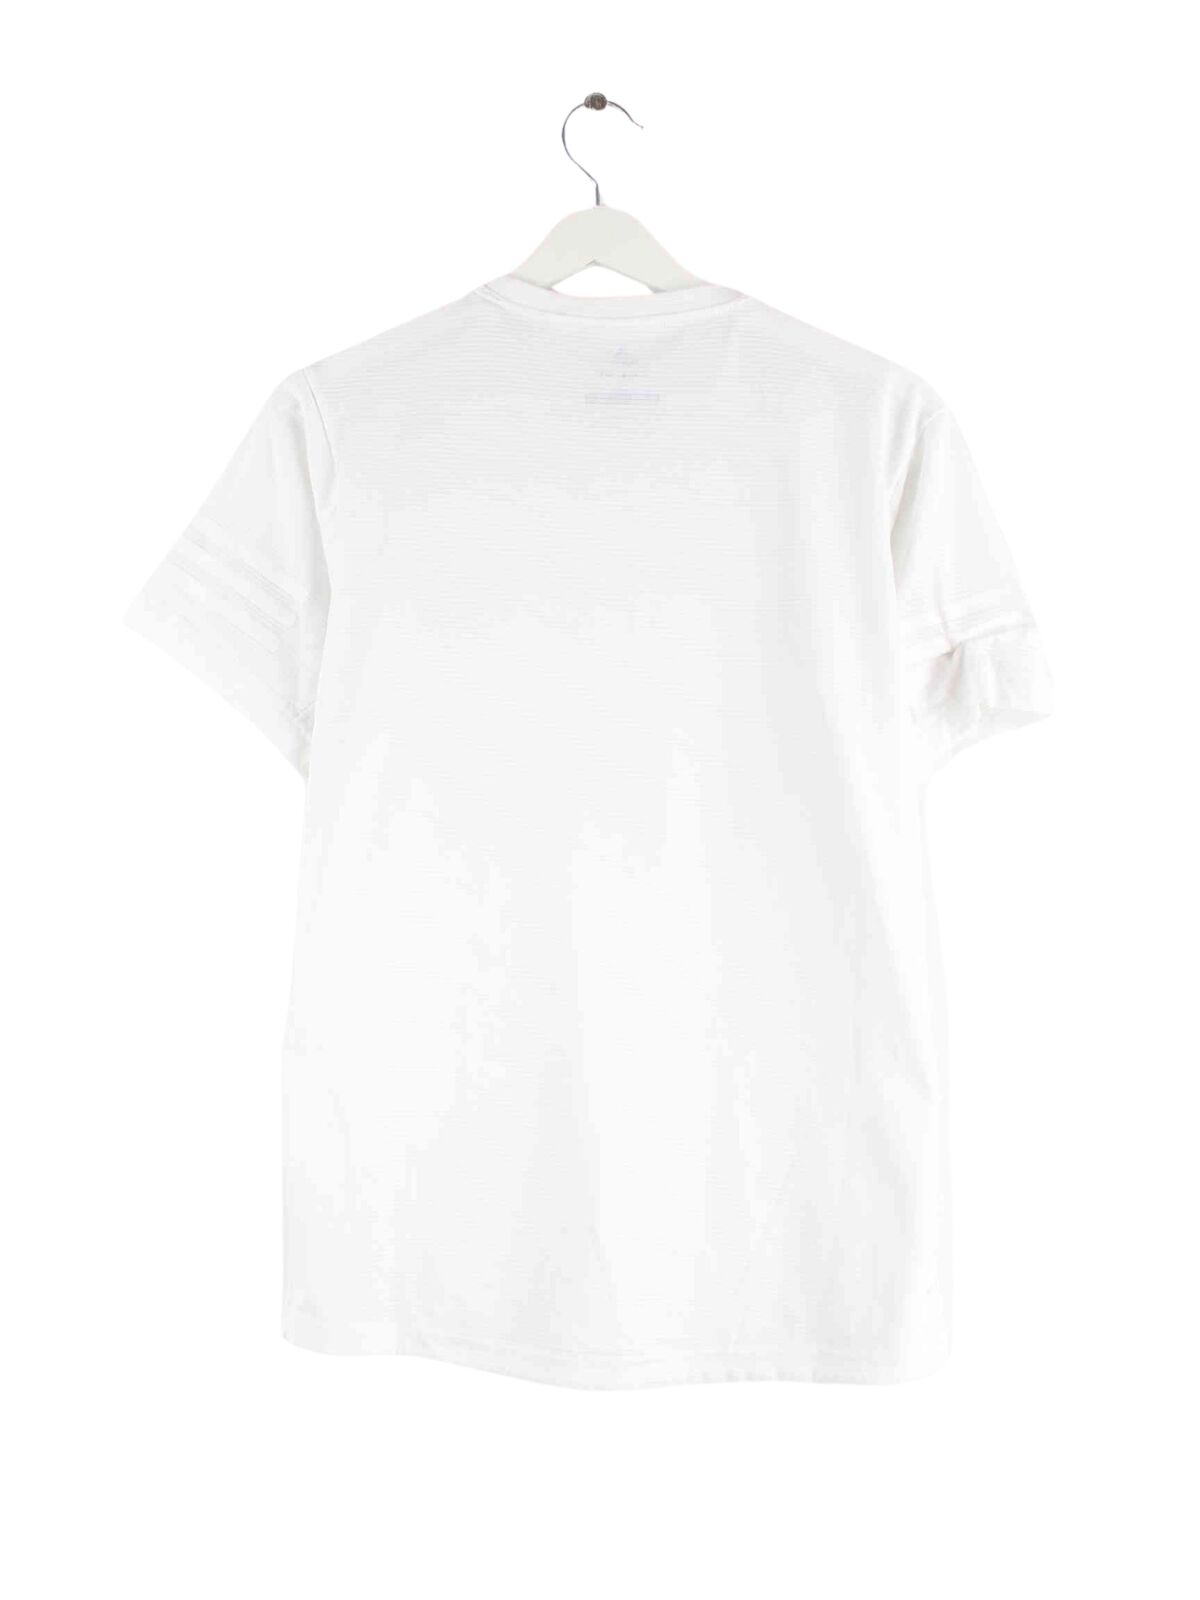 Adidas ClimaCool T-Shirt Weiß S (back image)